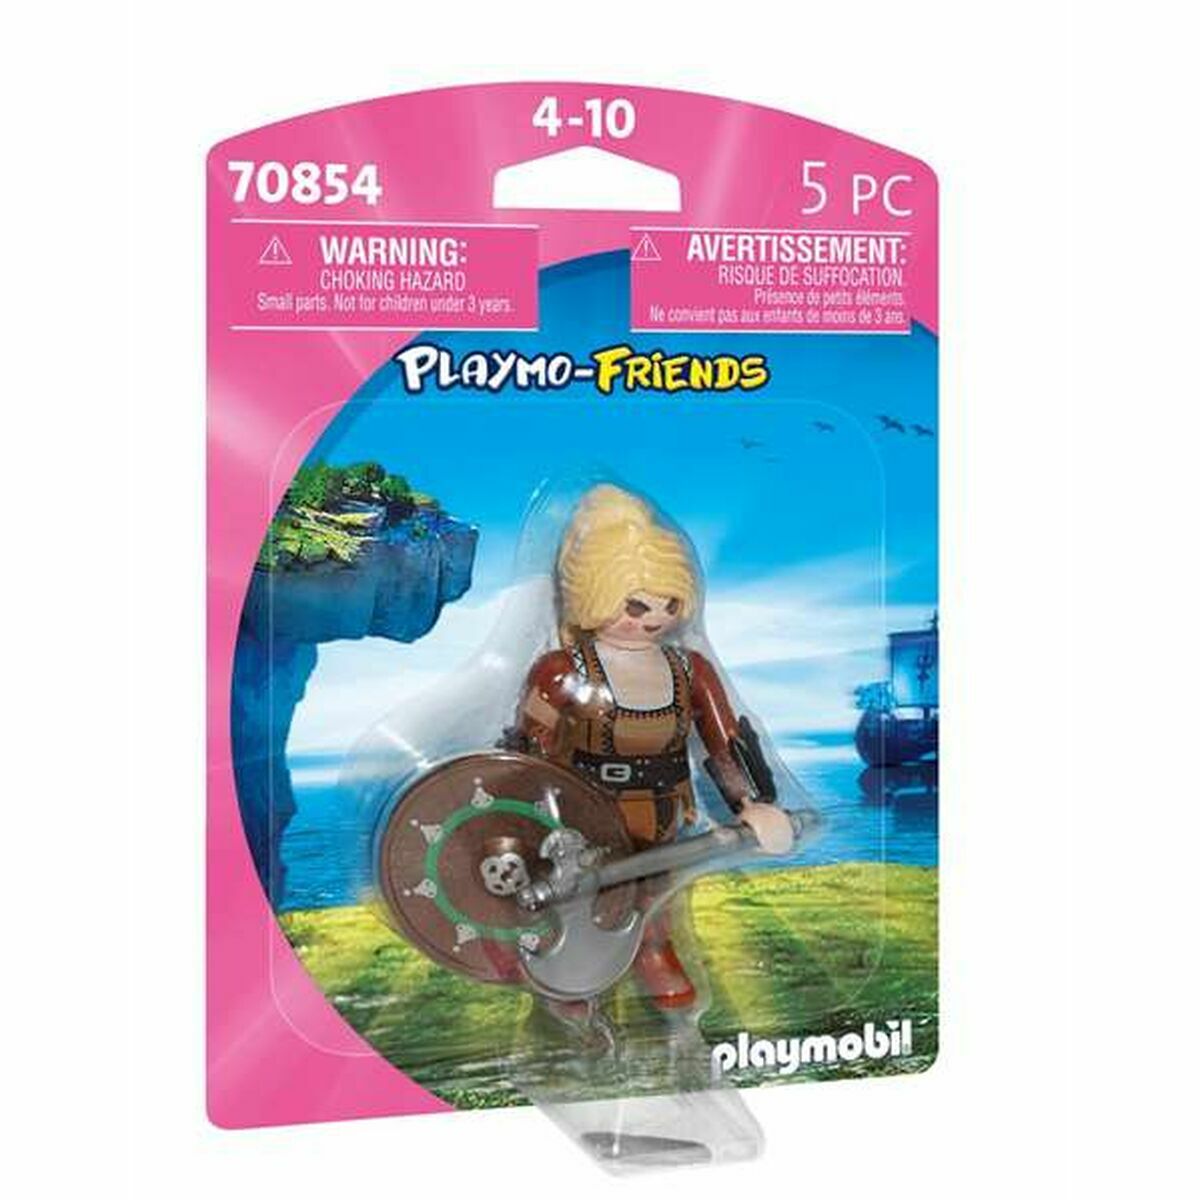 Figura îmbinată Playmobil Playmo-Friends 70854 Femeie Viking (5 pcs)